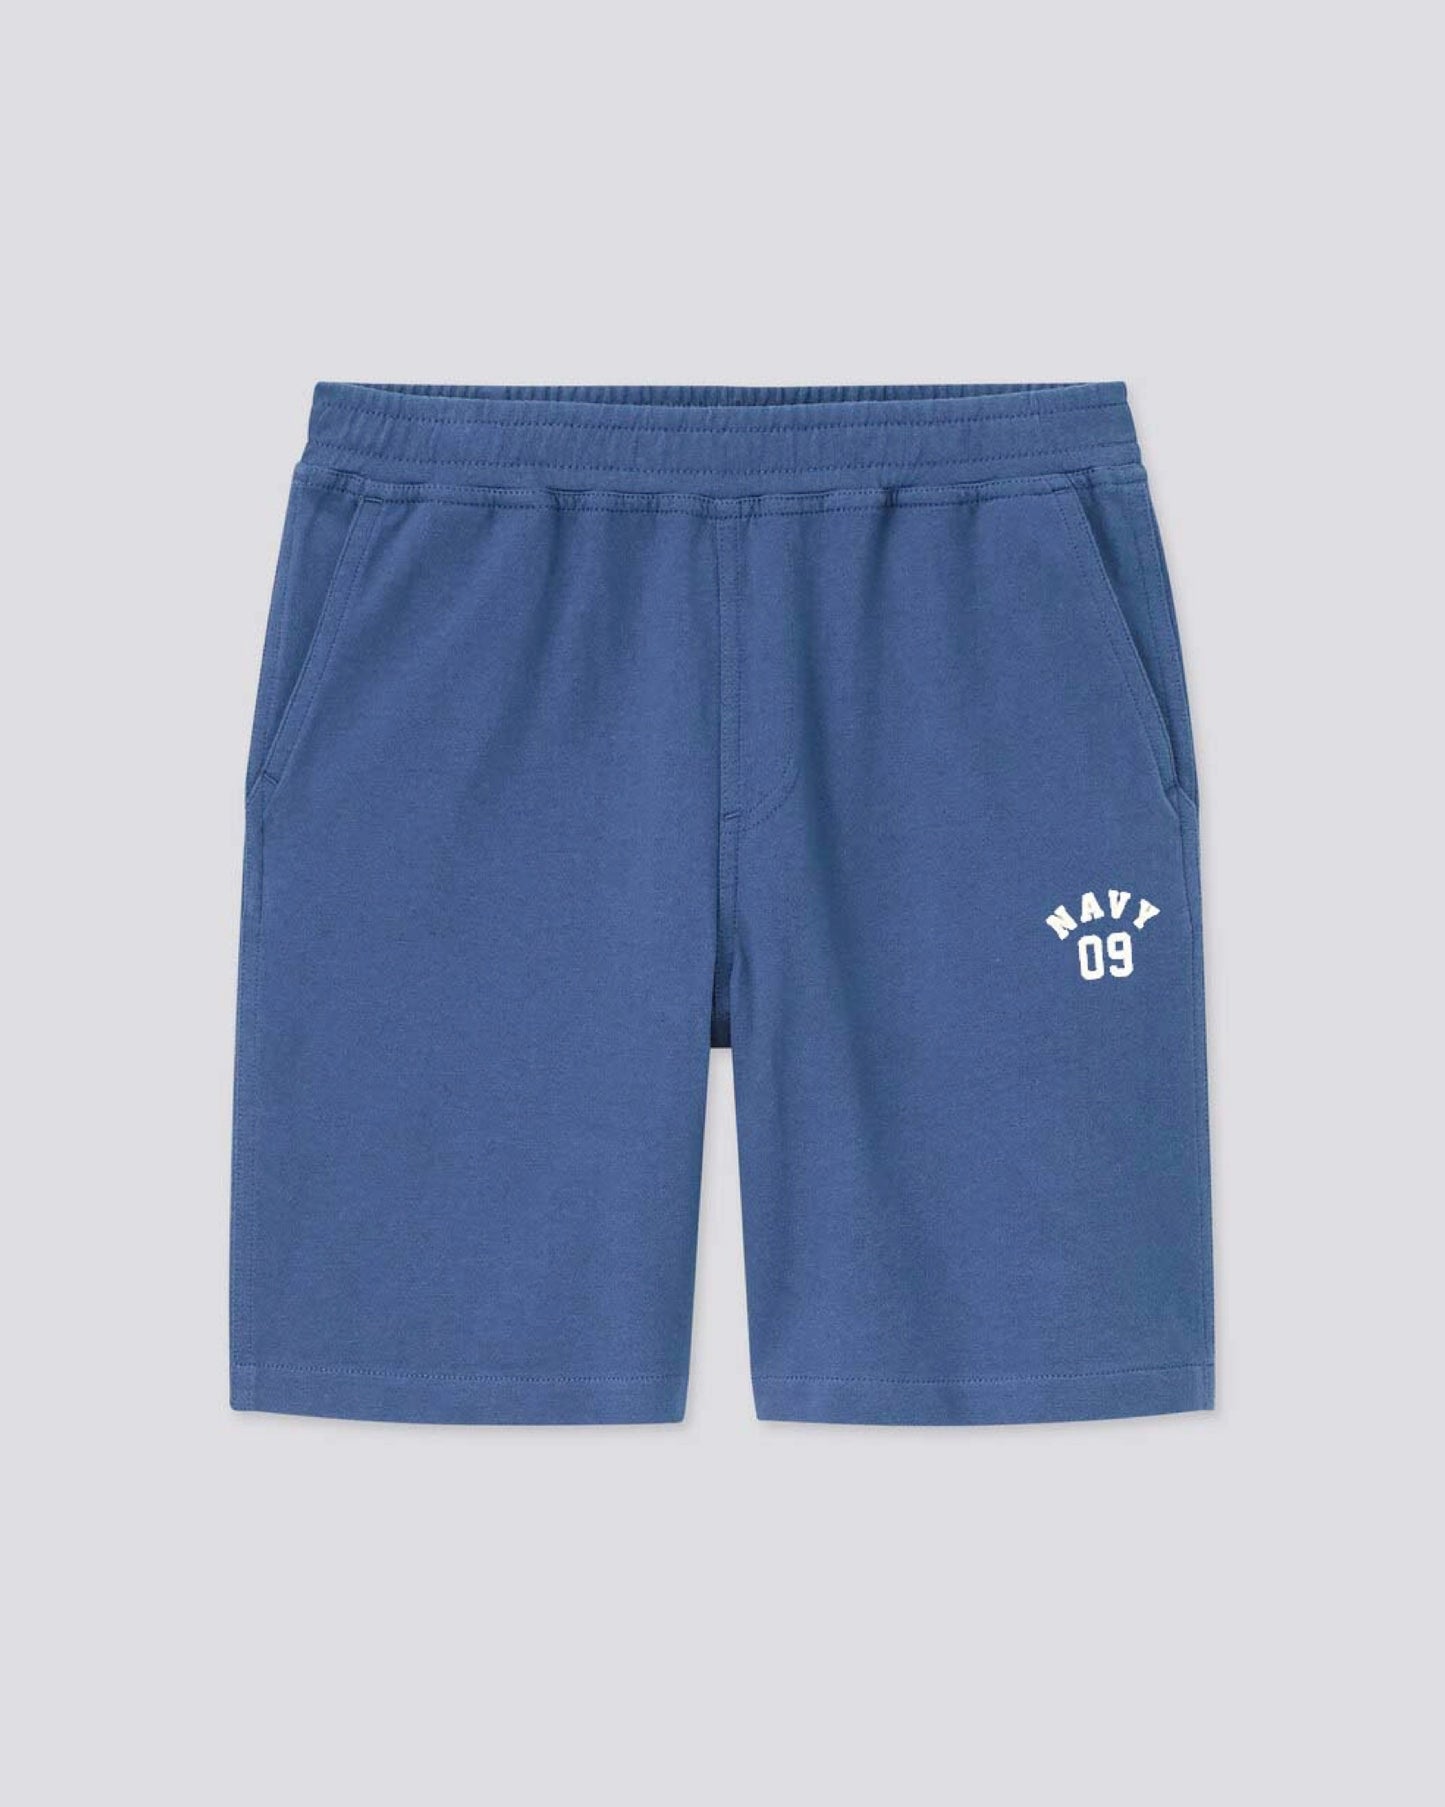 Spao navy 09 shorts in blue